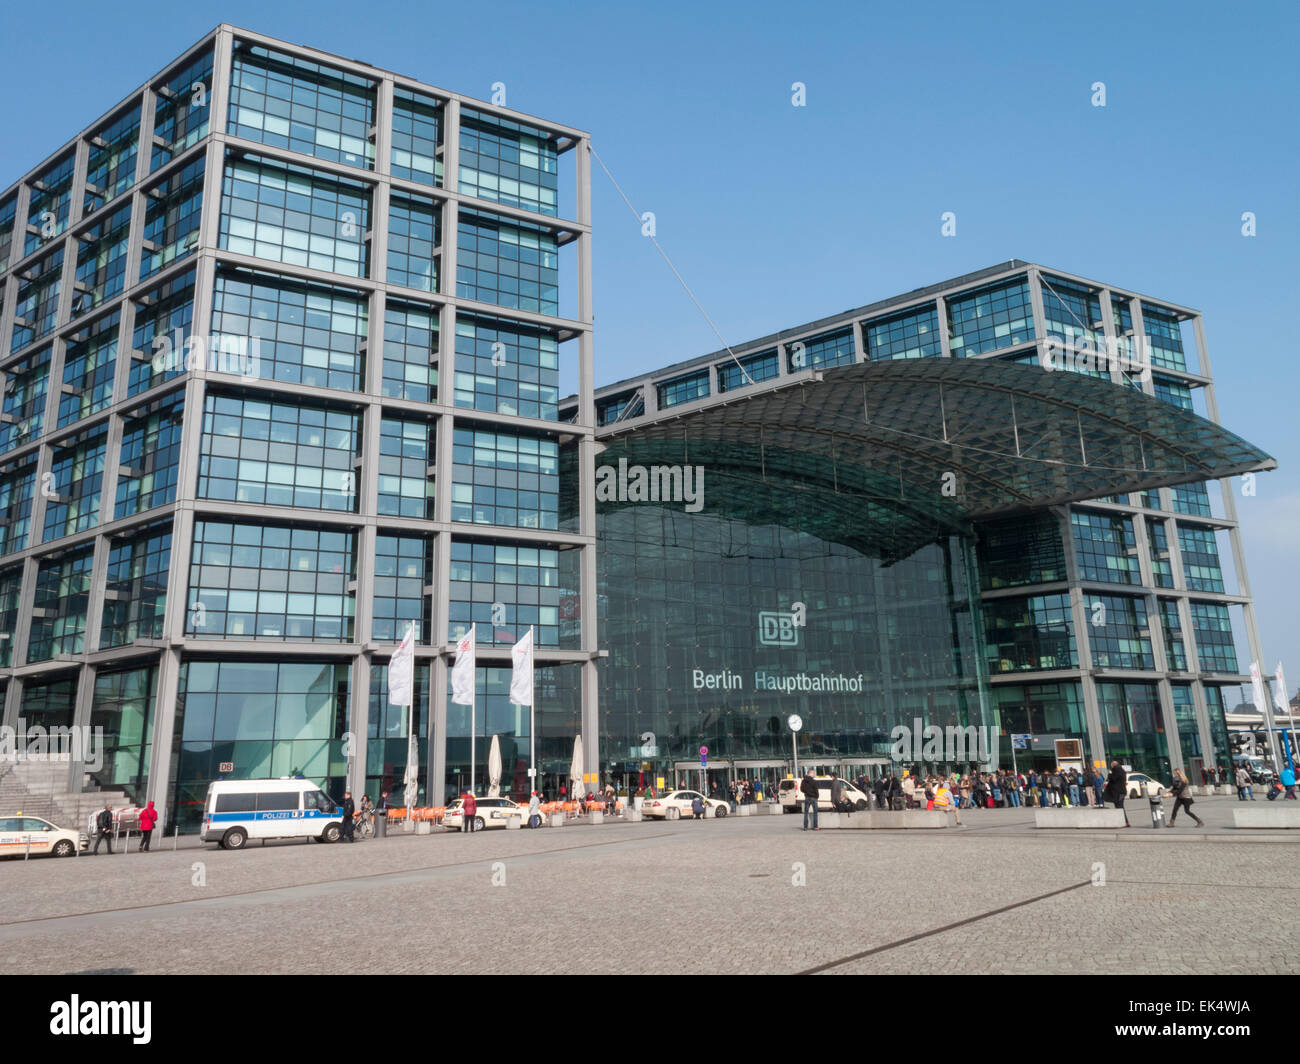 Berlin Hauptbahnhof, main railway Station facade entrance Stock Photo